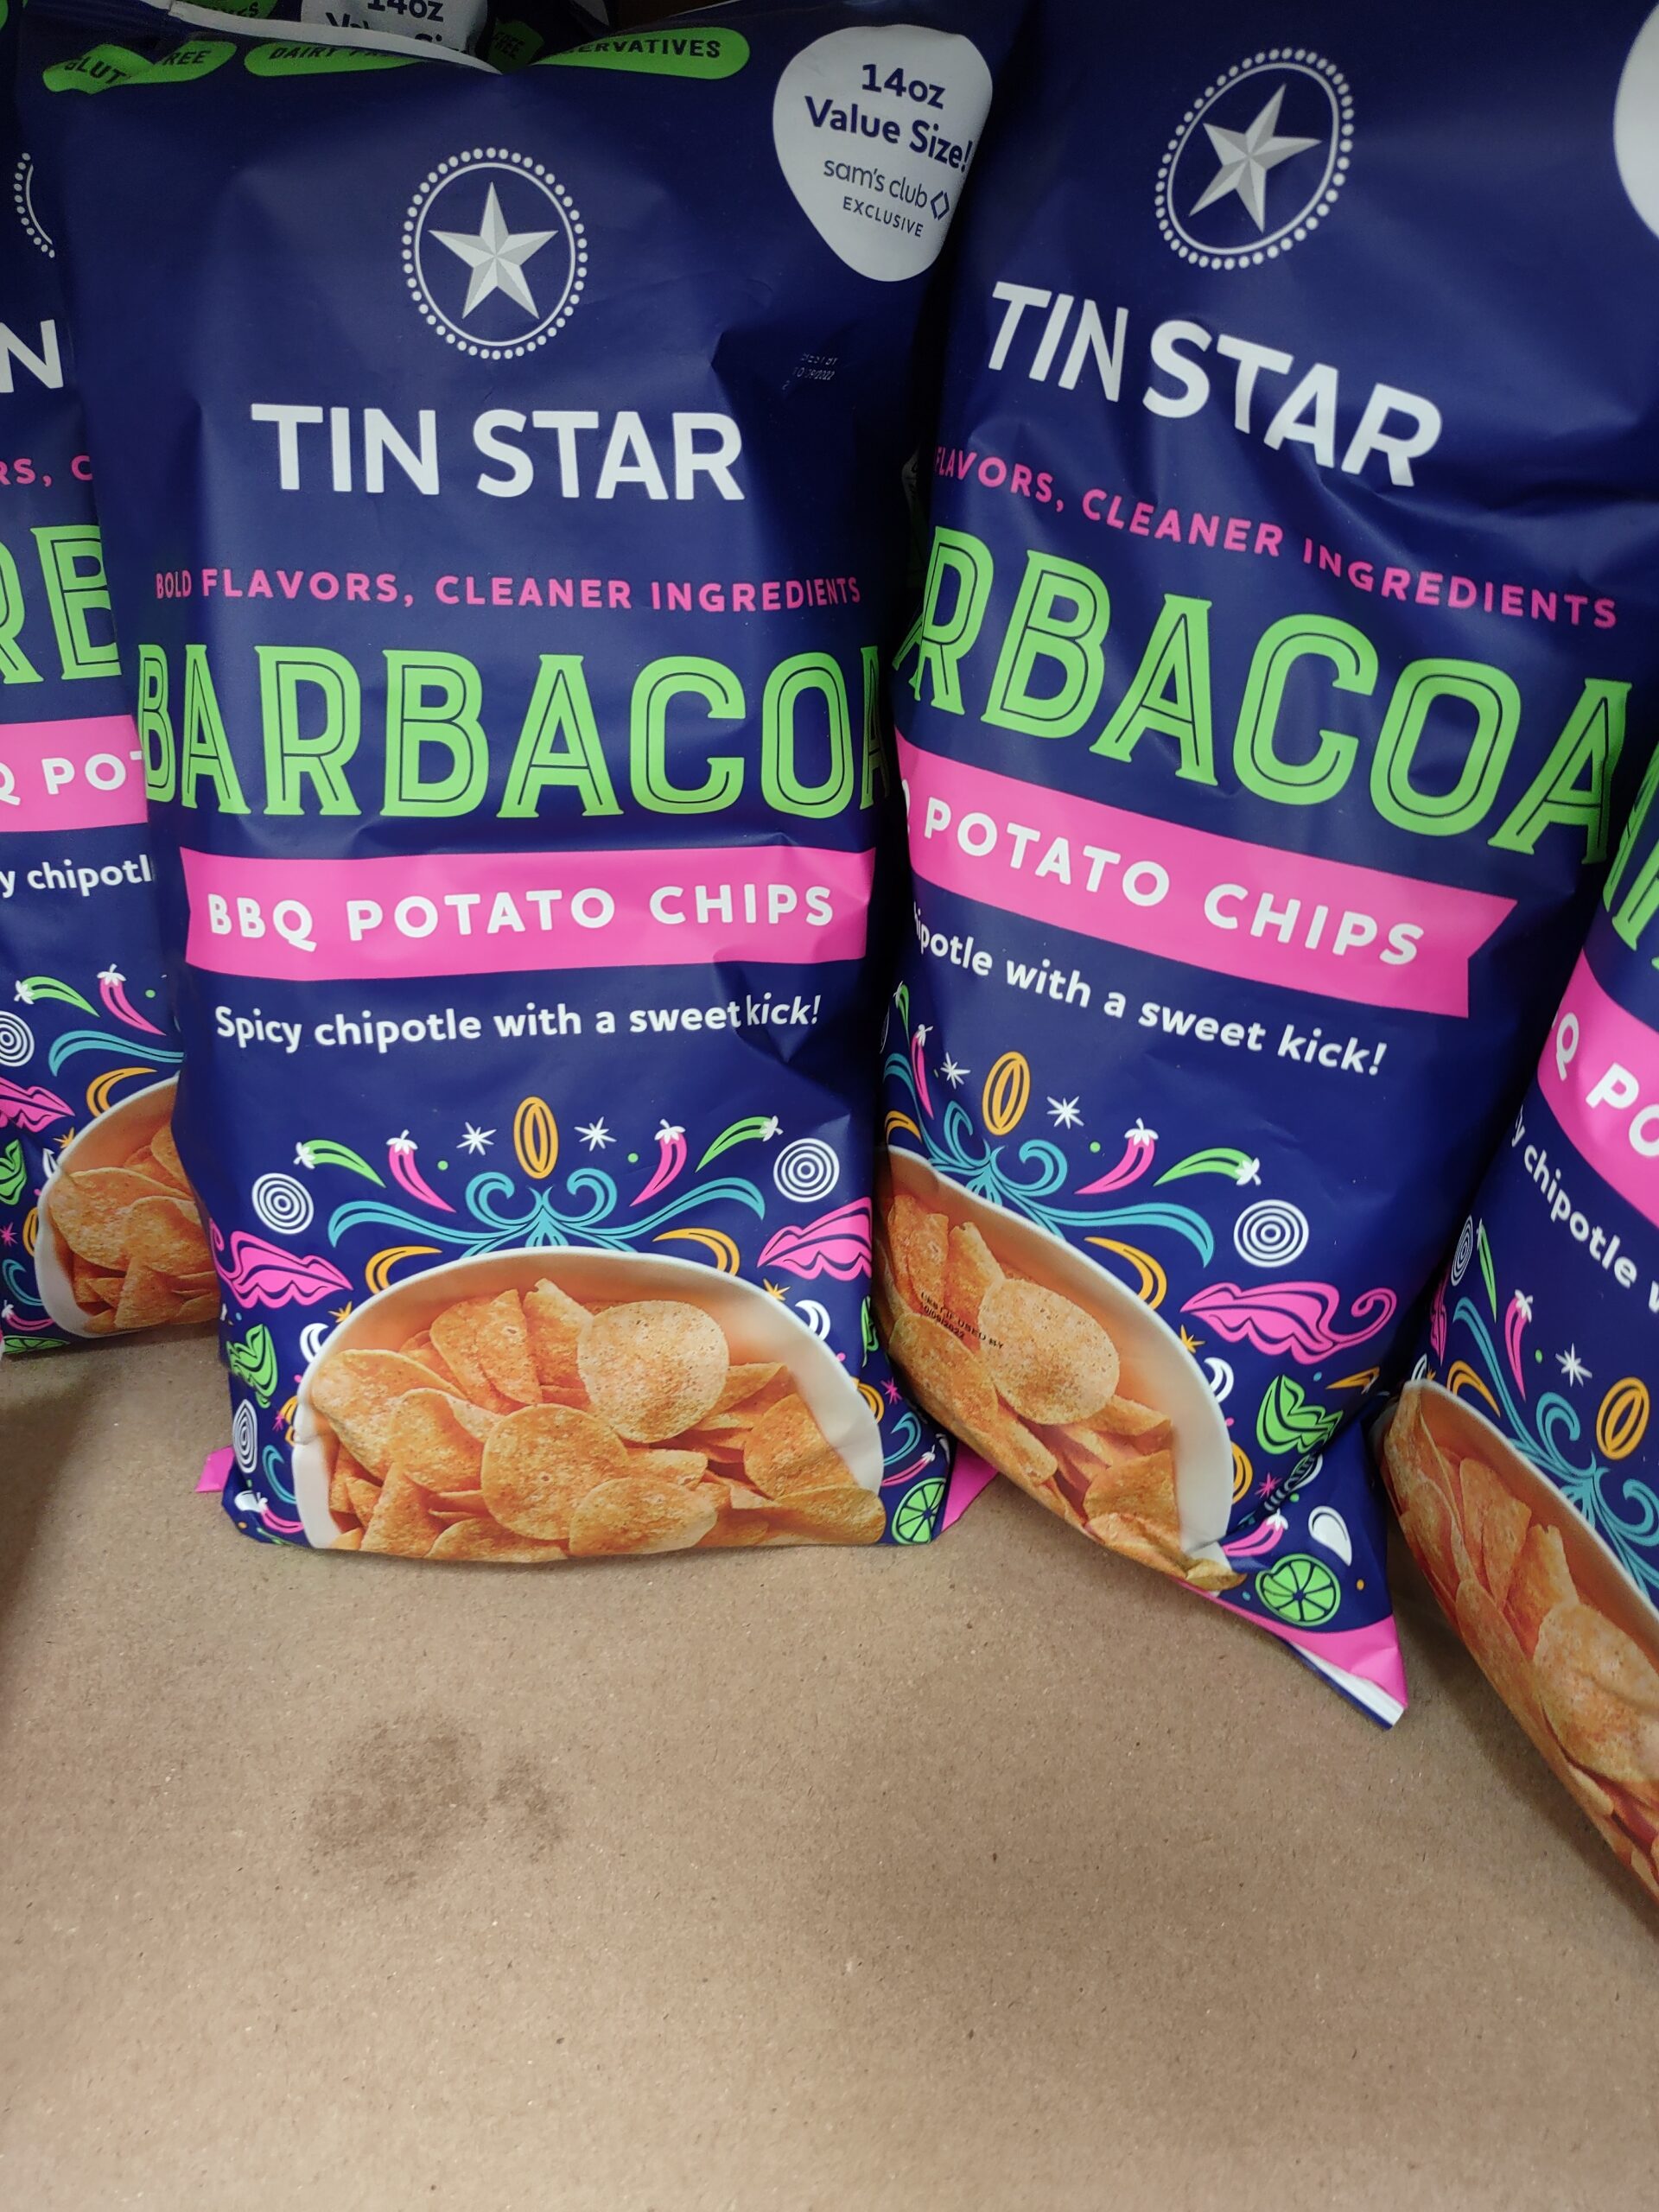 Tin Star Barbacoa Potato Chips $1.91 at Sam’s